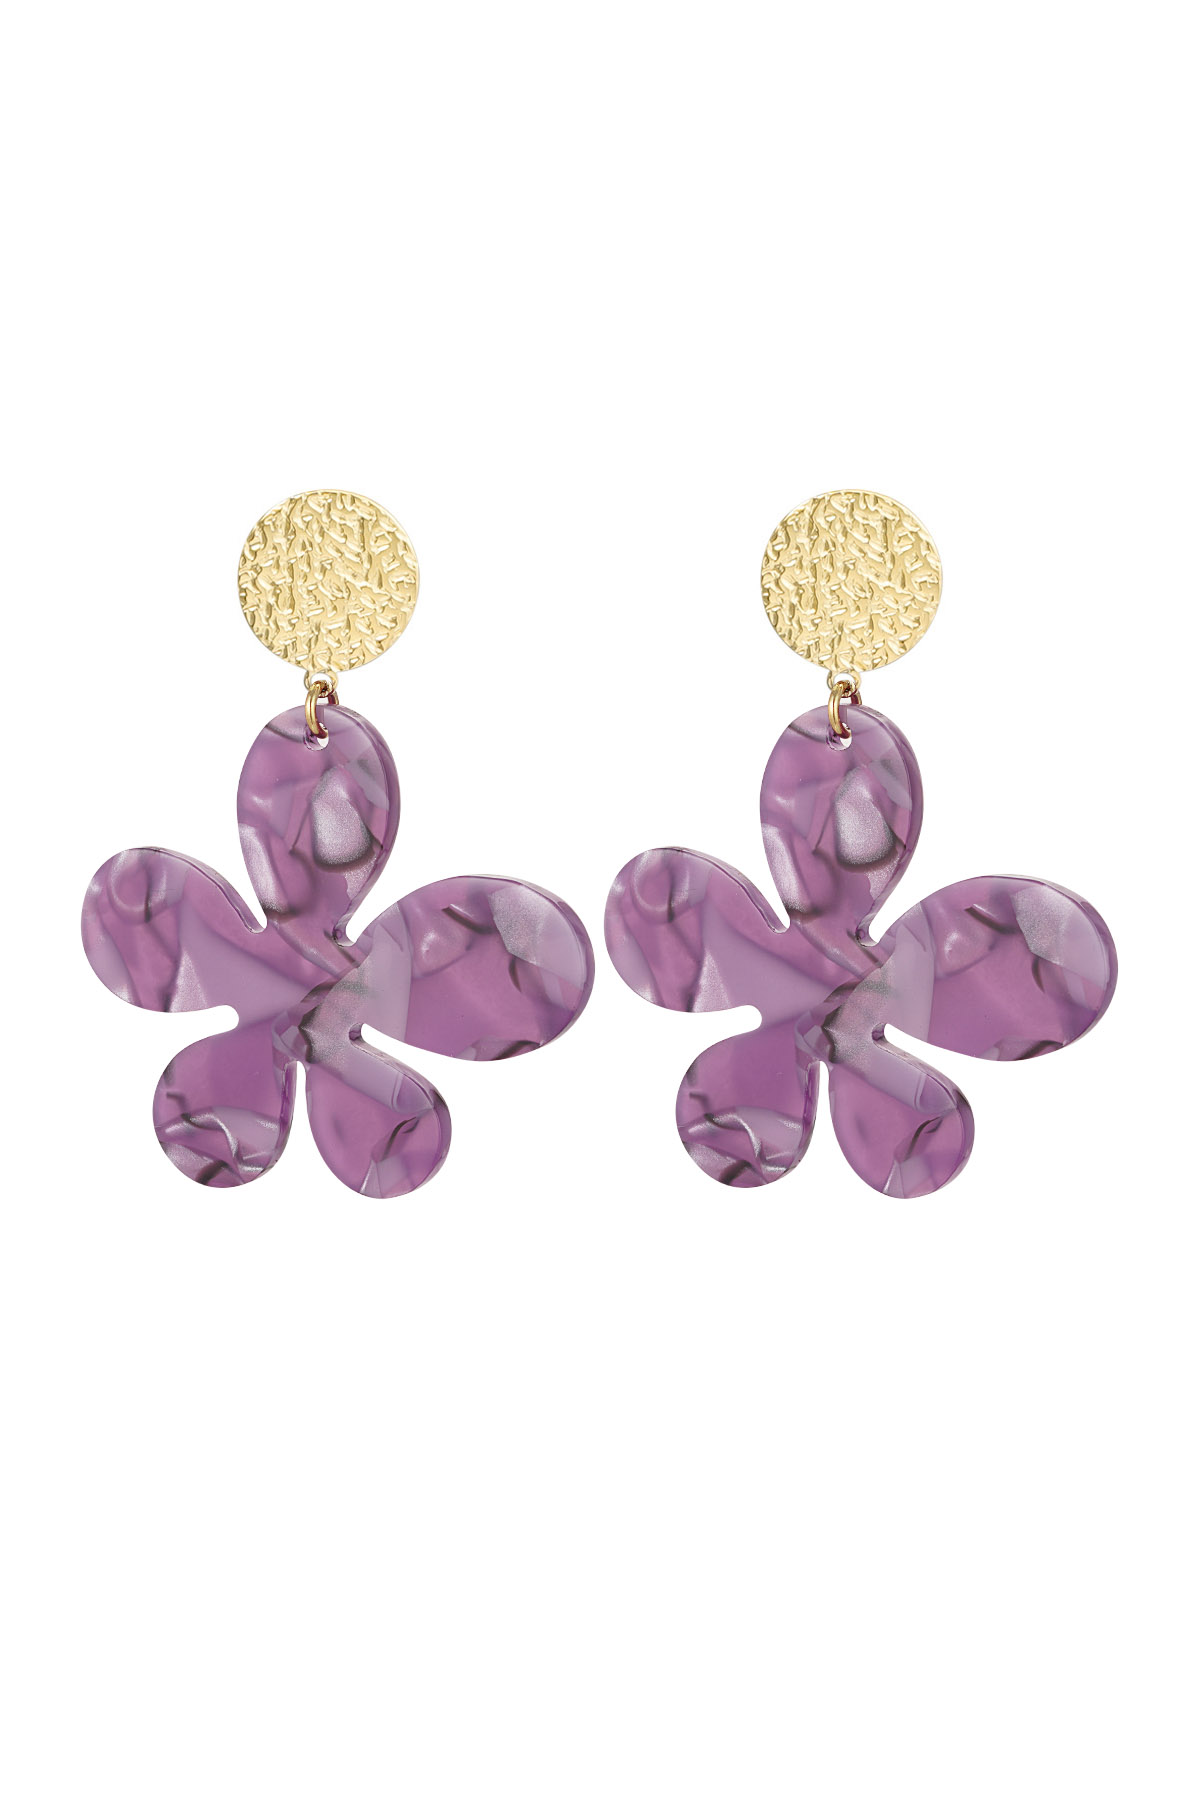 Flower earrings with print - gold/purple 